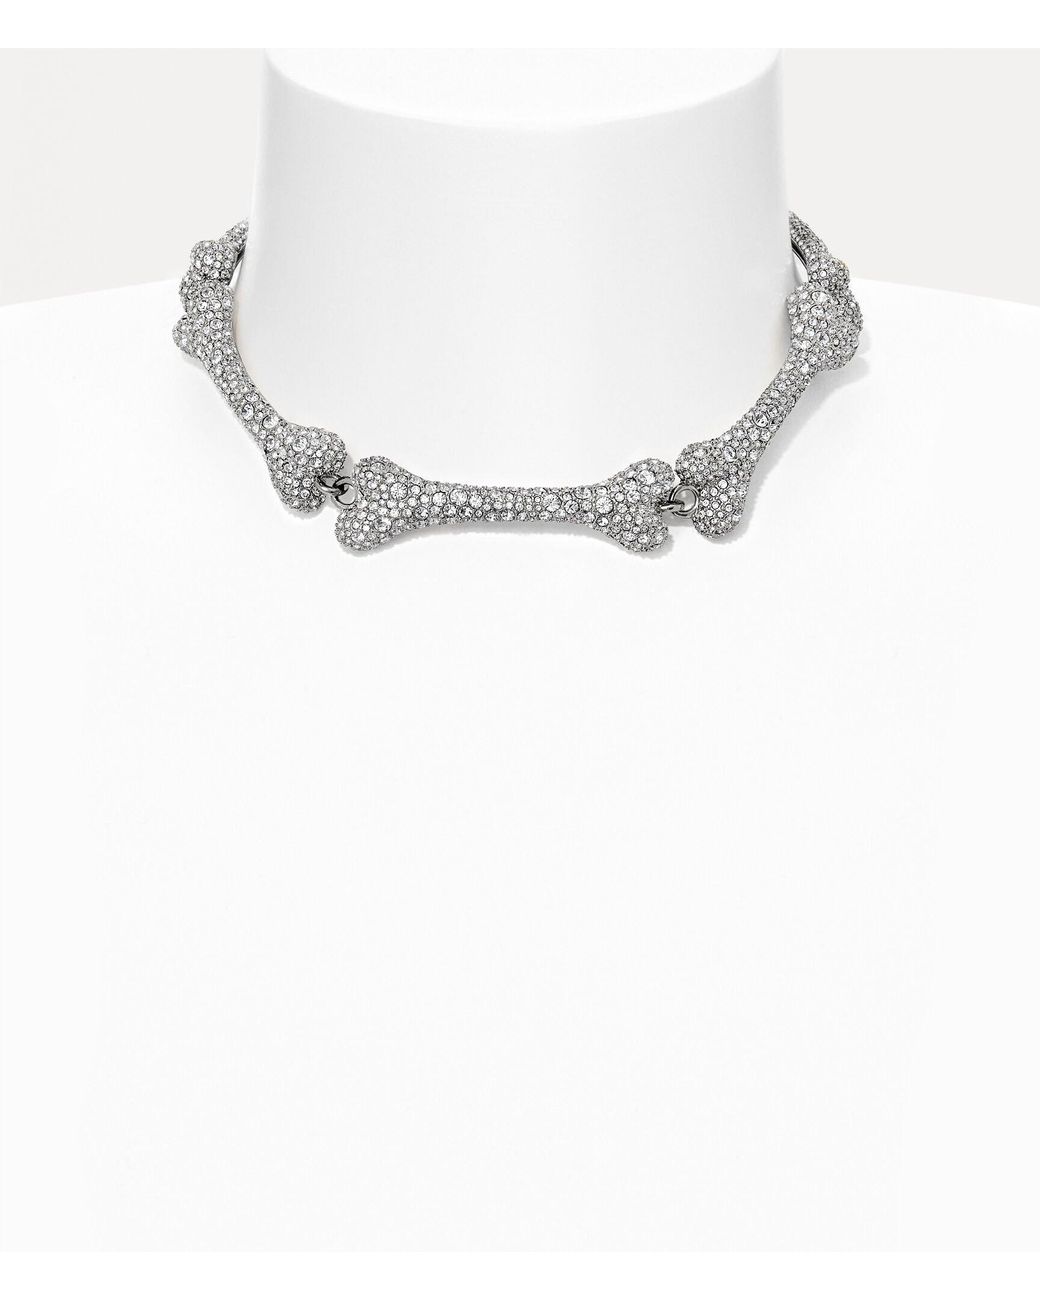 Vivienne Westwood Bone-Shaped Choker Necklace Silver Chain Length 40cm  Japan | eBay